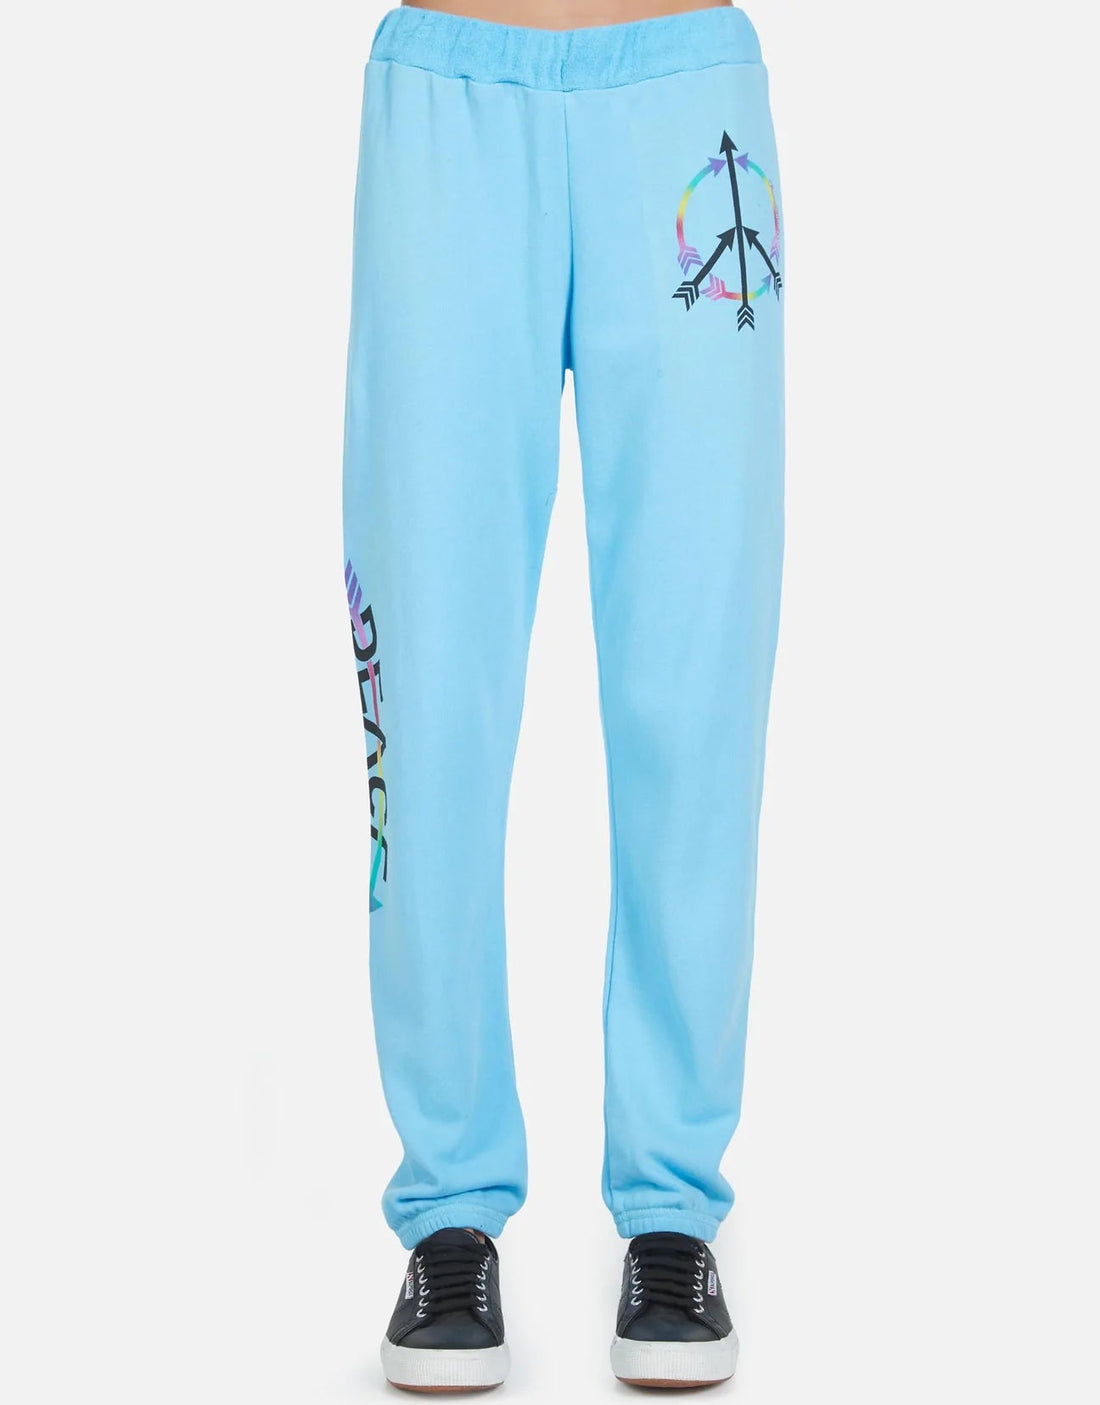 Shop Lauren Moshi Gia Peace Arrow Jogger Pants - Premium Jogging Pants from Lauren Moshi Online now at Spoiled Brat 